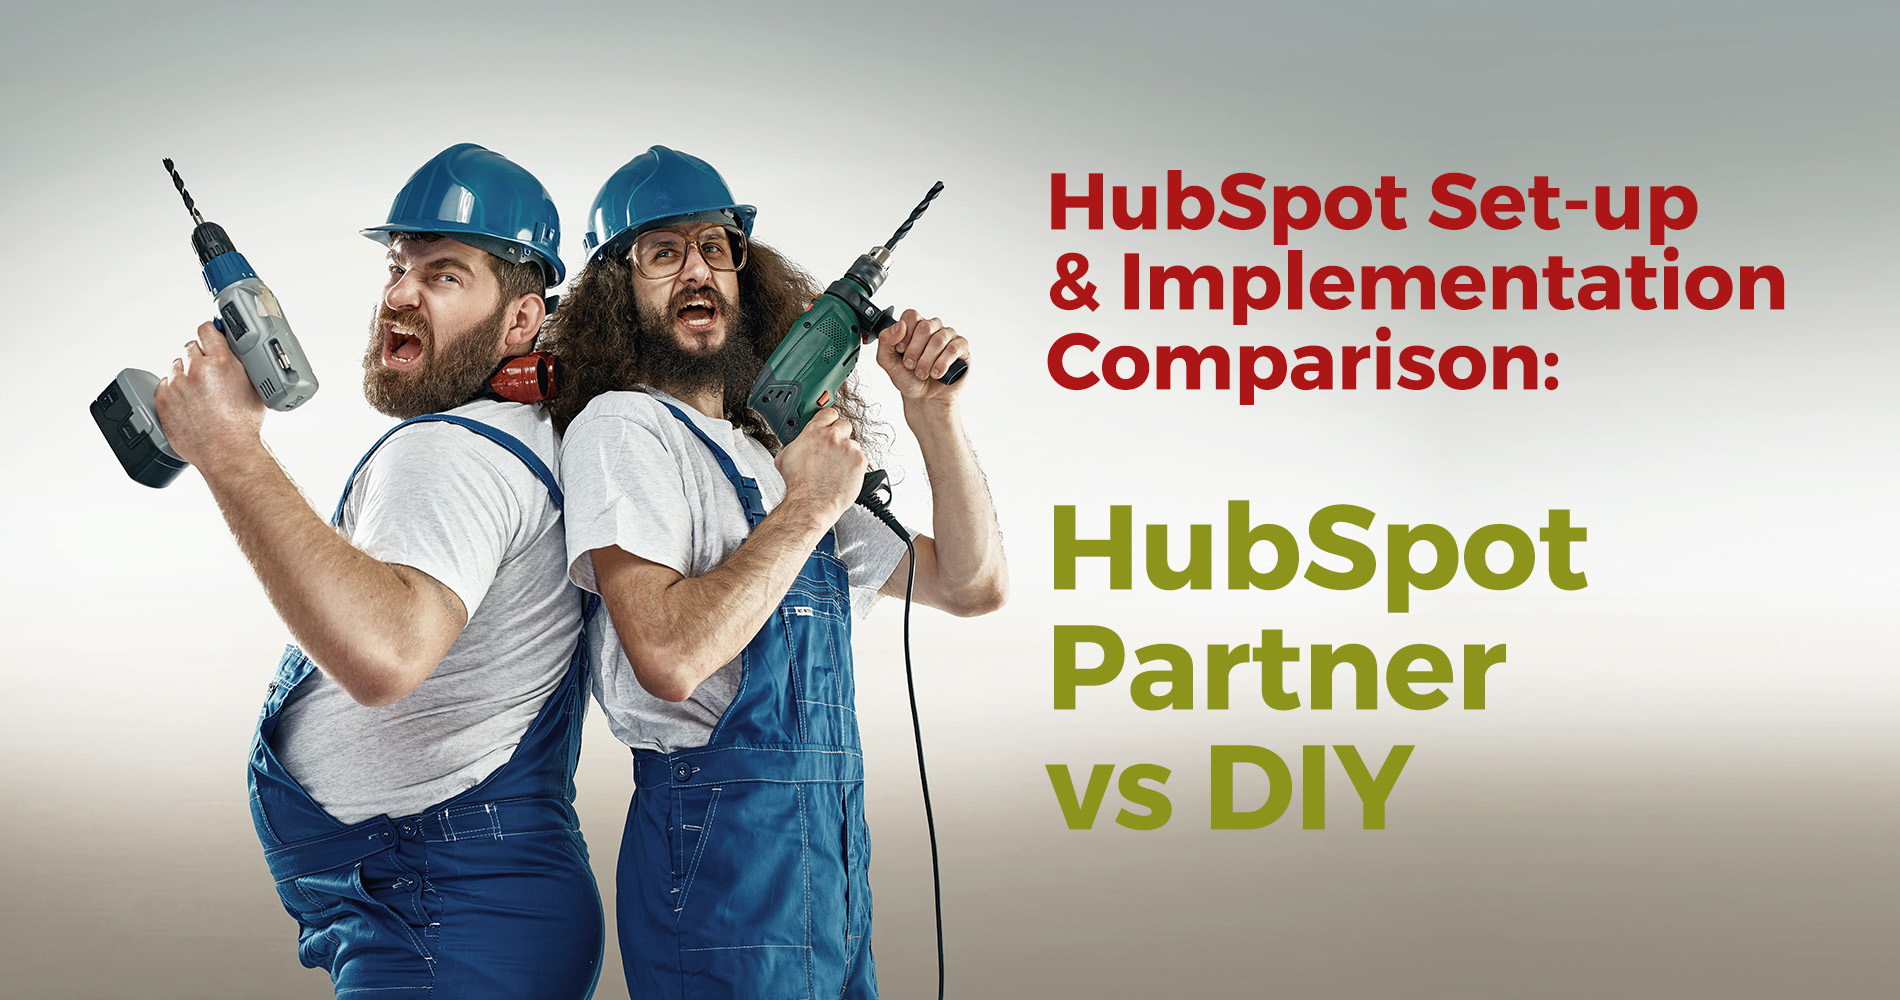 HubSpot Set-up & Implementation Comparison: HubSpot Partner vs DIY